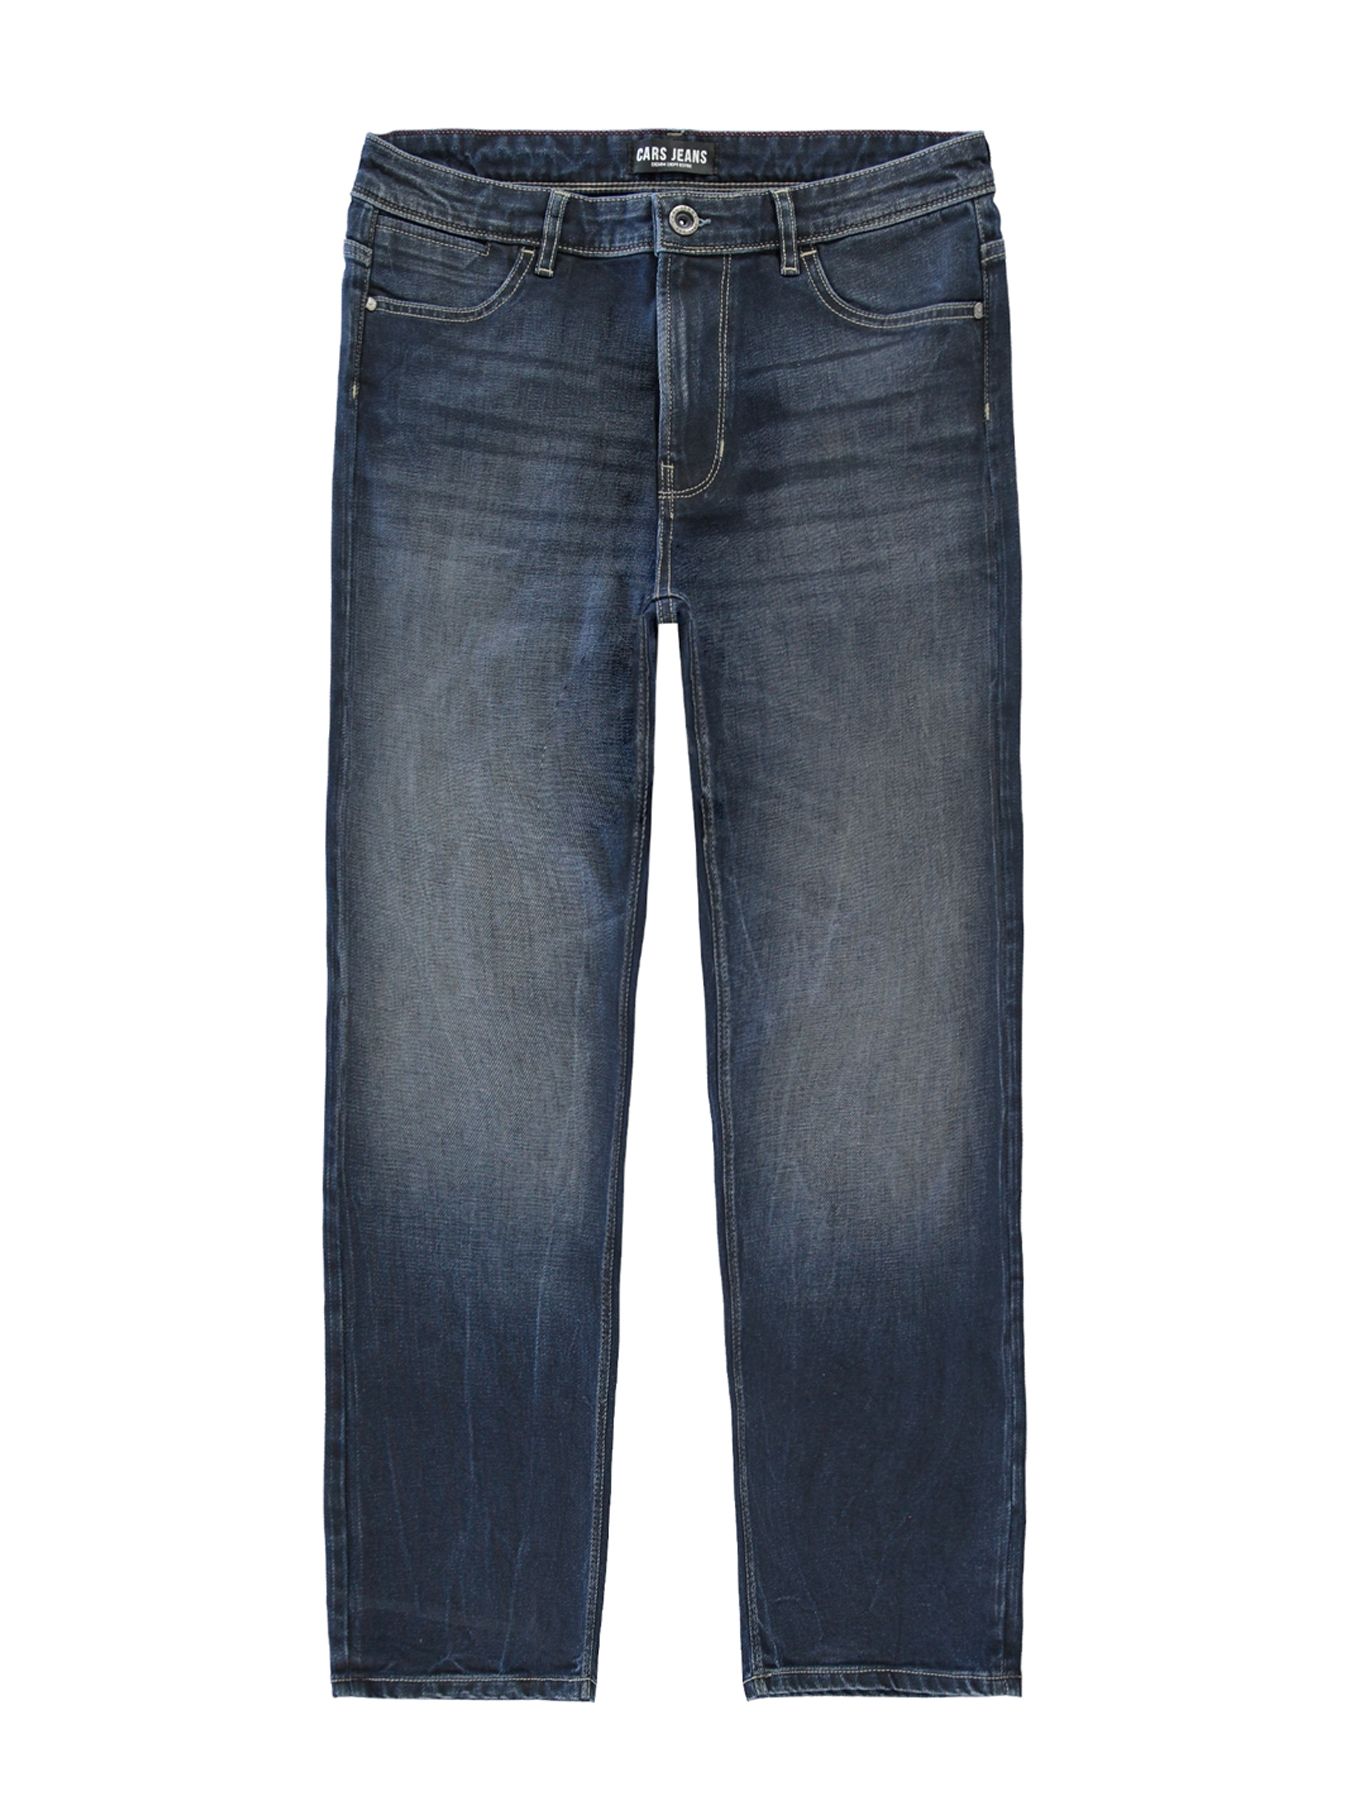 Cars jeans Jeans Guard Loose Fit 40 coated dark blue 00106873-EKA03000200000034